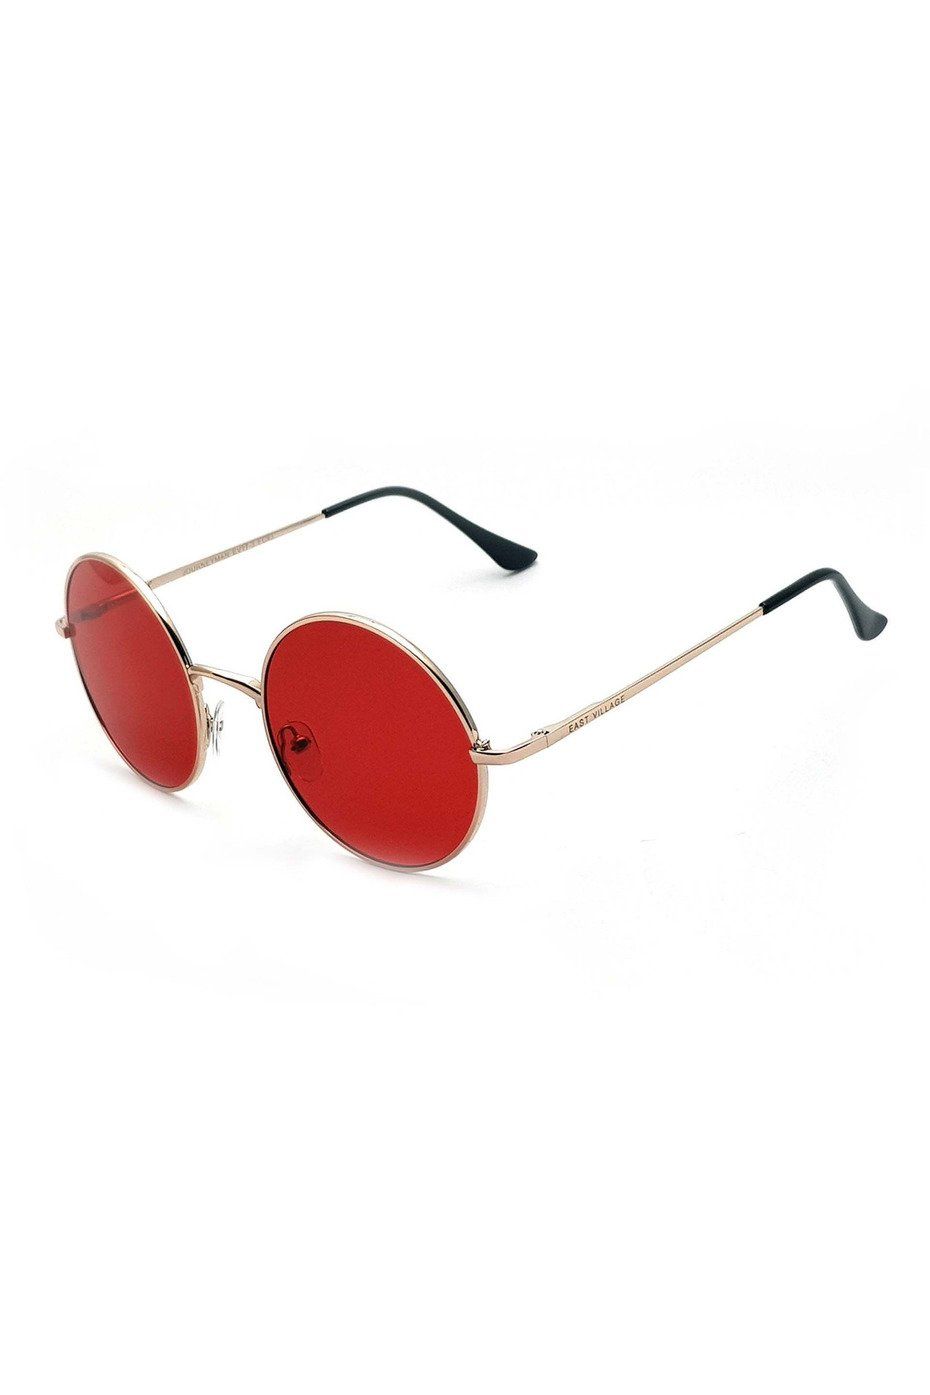 Round Sunglasses: Adding Retro Charm to Your Look